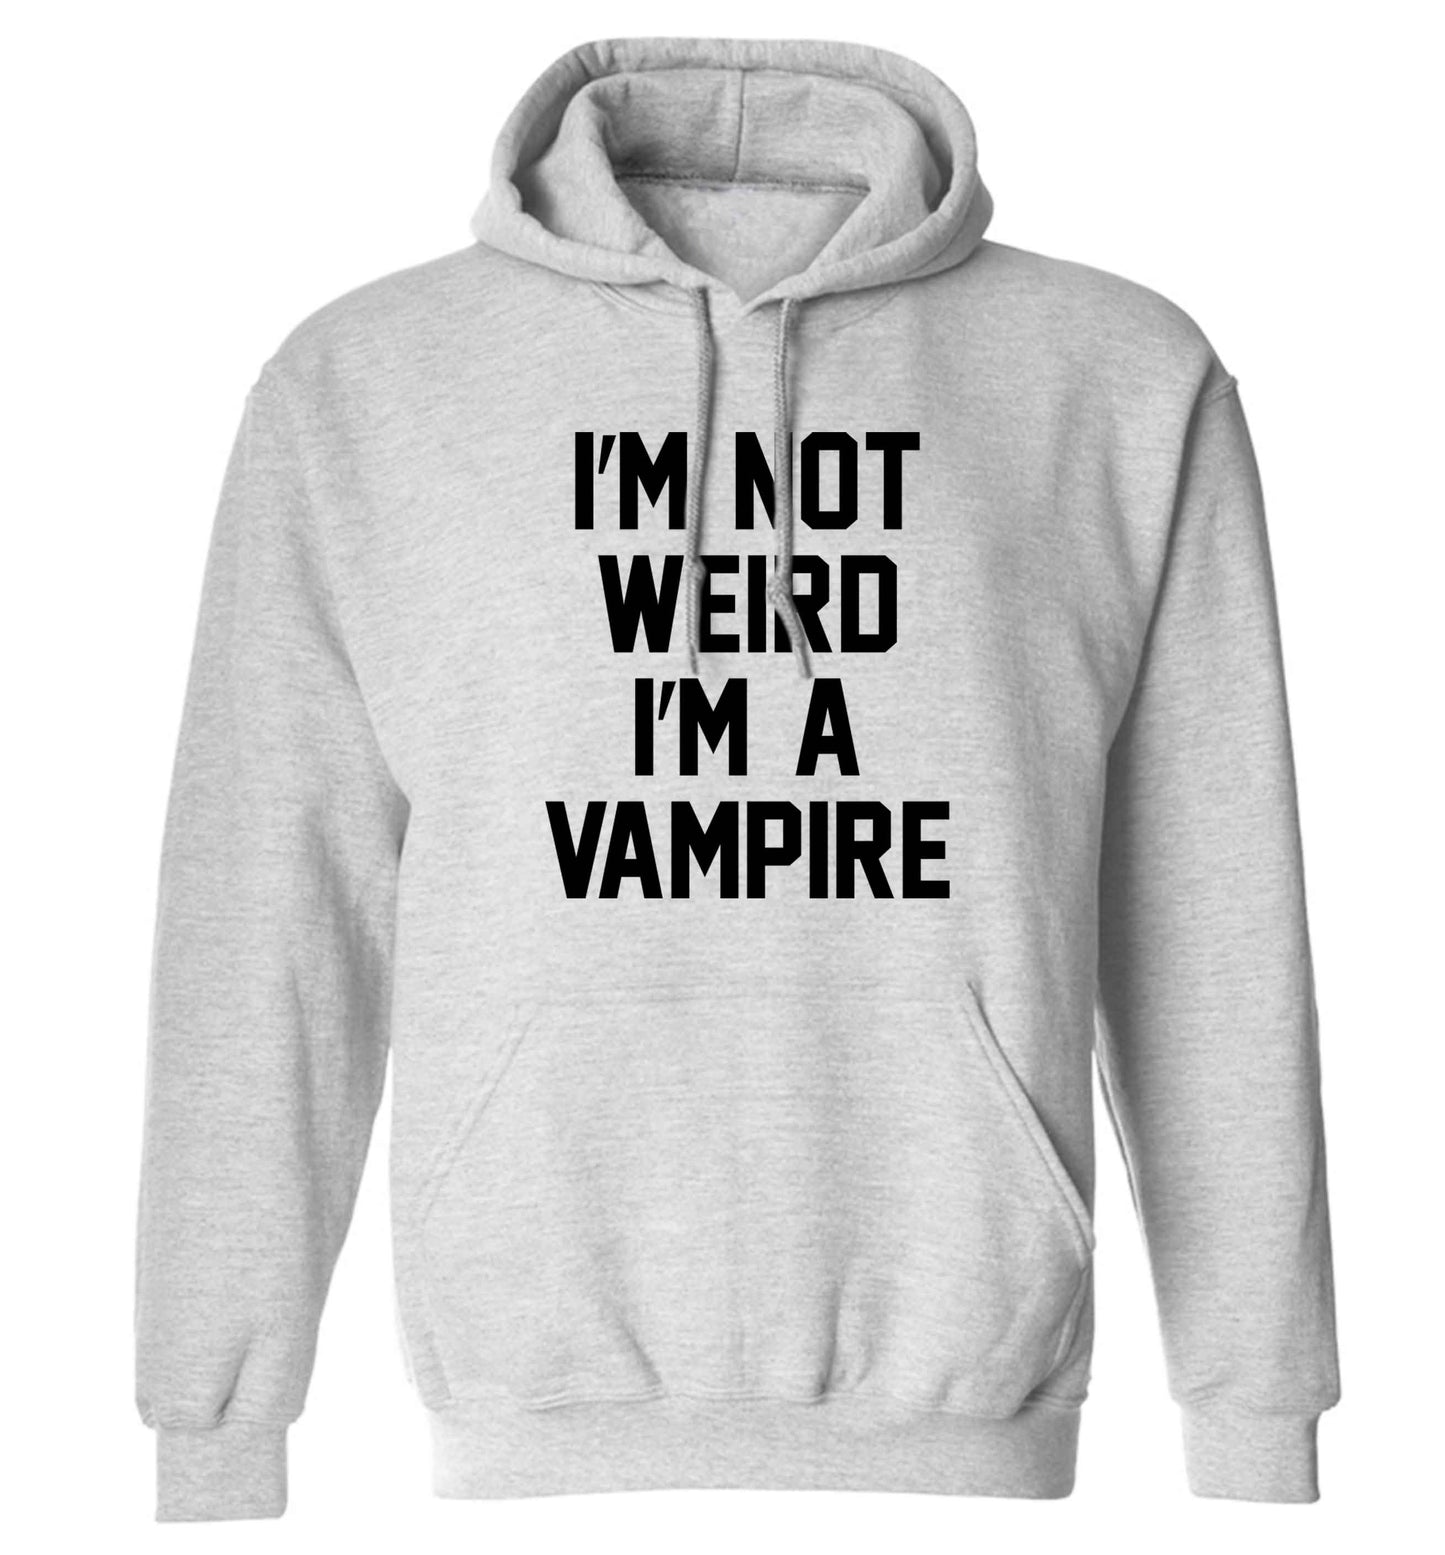 I'm not weird I'm a vampire adults unisex grey hoodie 2XL